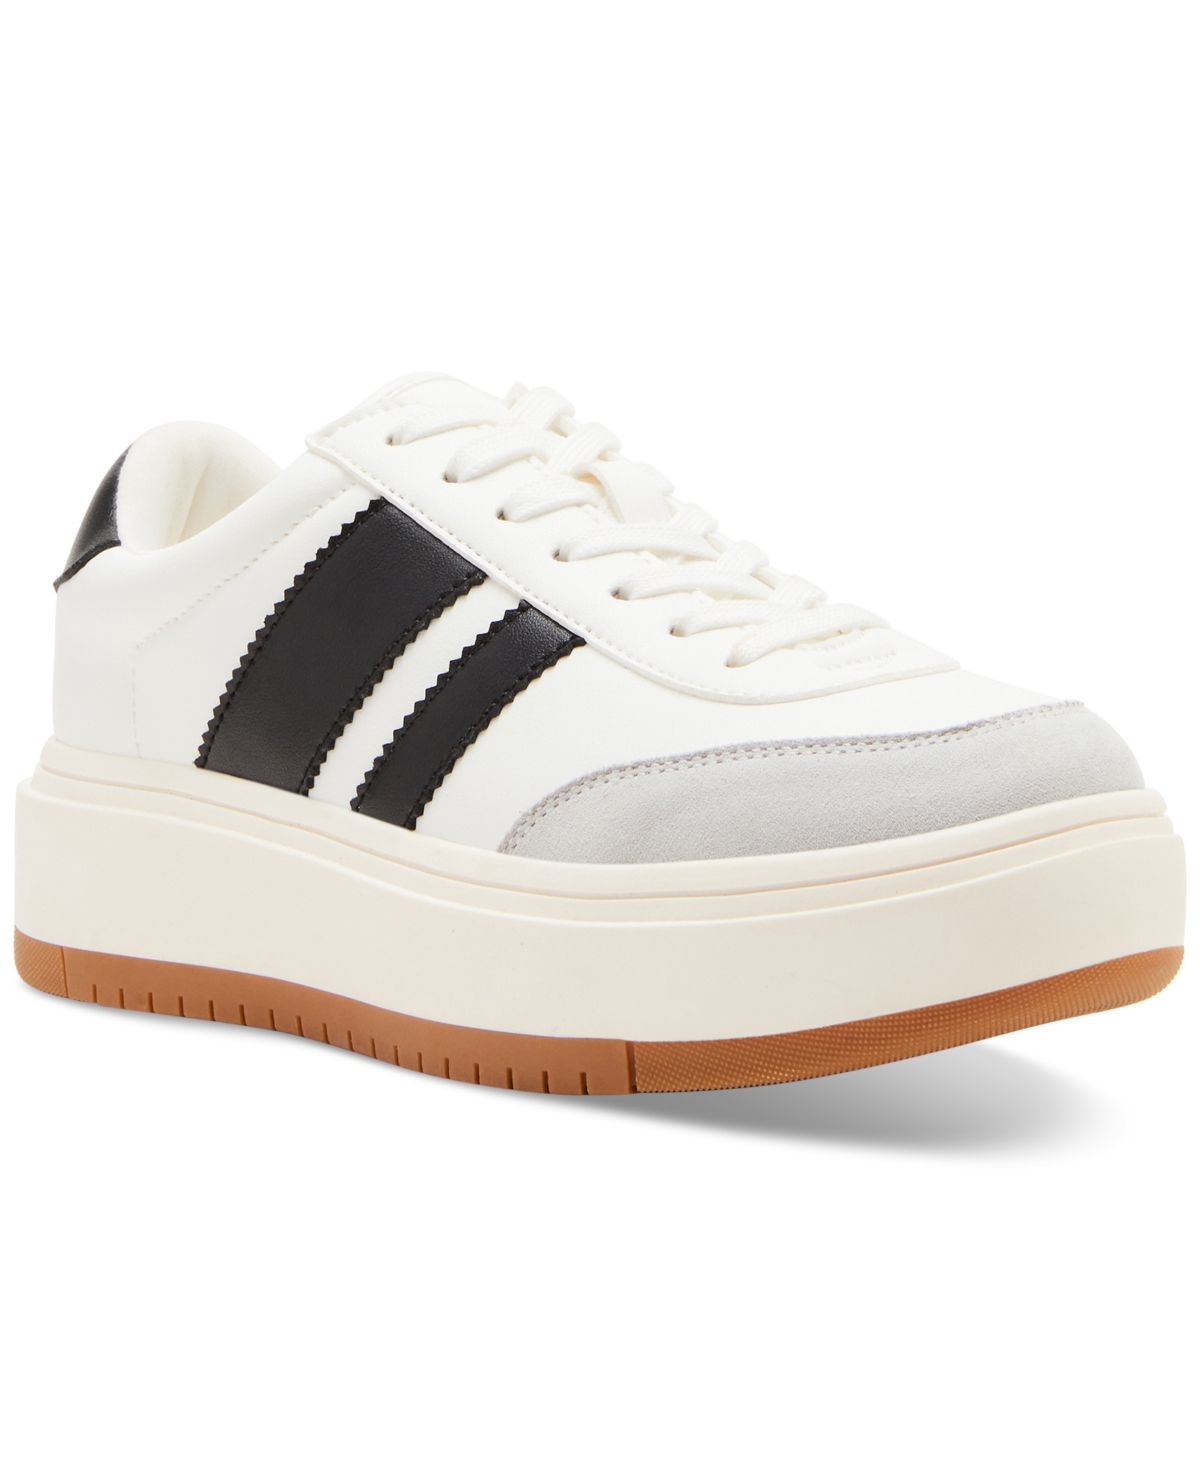 Navida Lace-Up Low-Top Platform Sneakers - White/Black/Grey